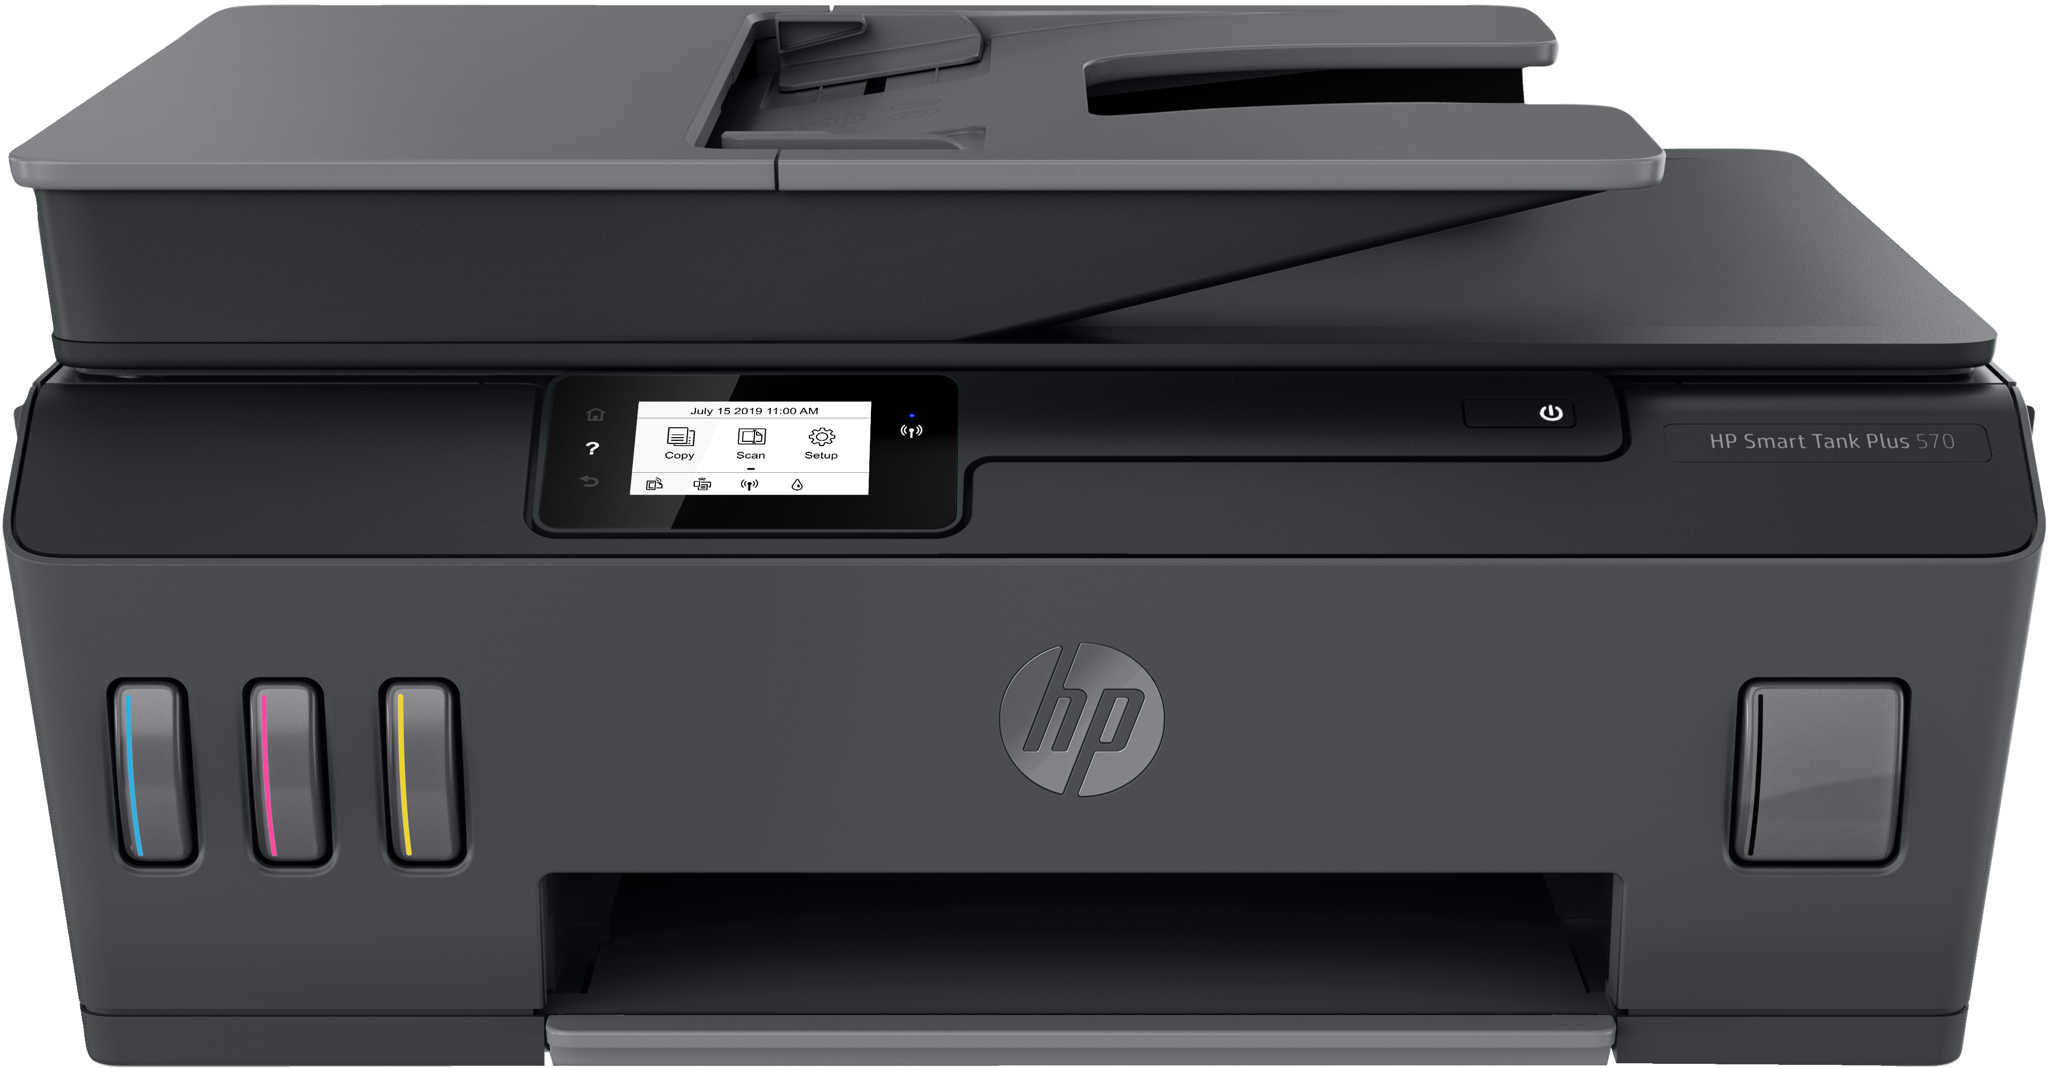 Bild von HP Multifunktionsdrucker Smart Tank Plus 570 All-in-One - Multifunktionsgerät - Tintenstrahldruck